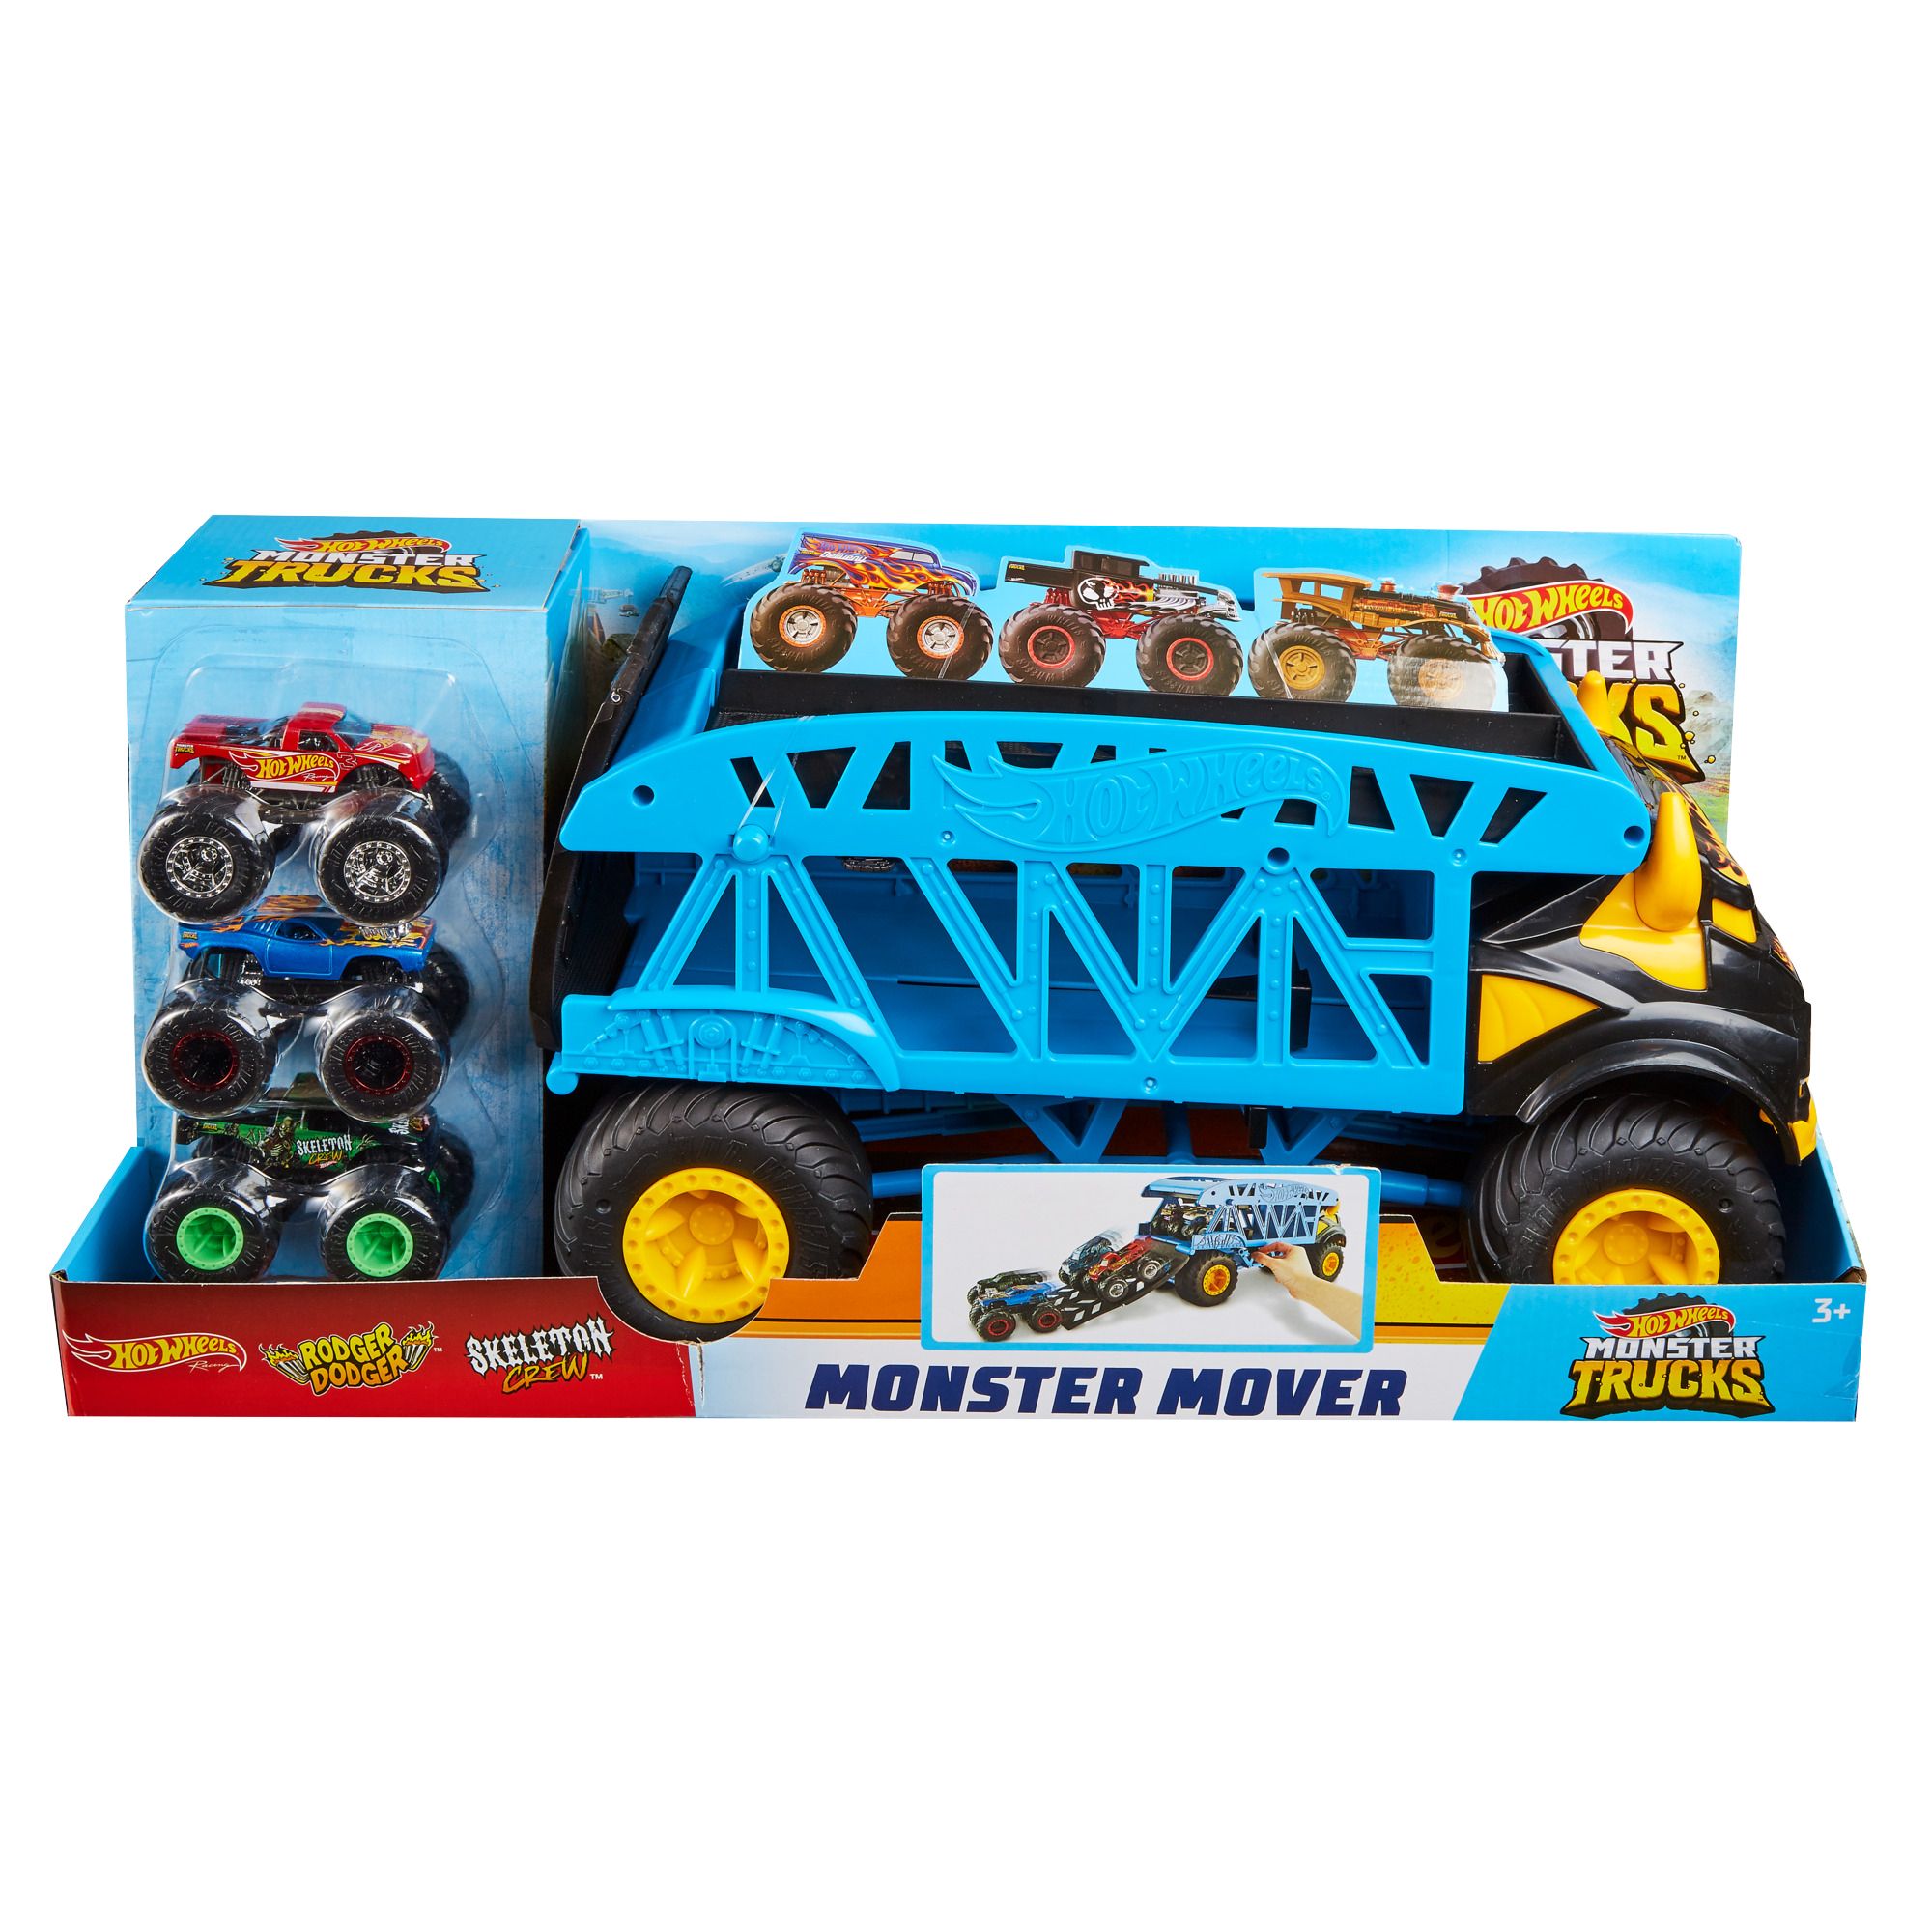 Mattel Hot Wheels City Track Set with 1 Hot Wheels Car Ice Cream